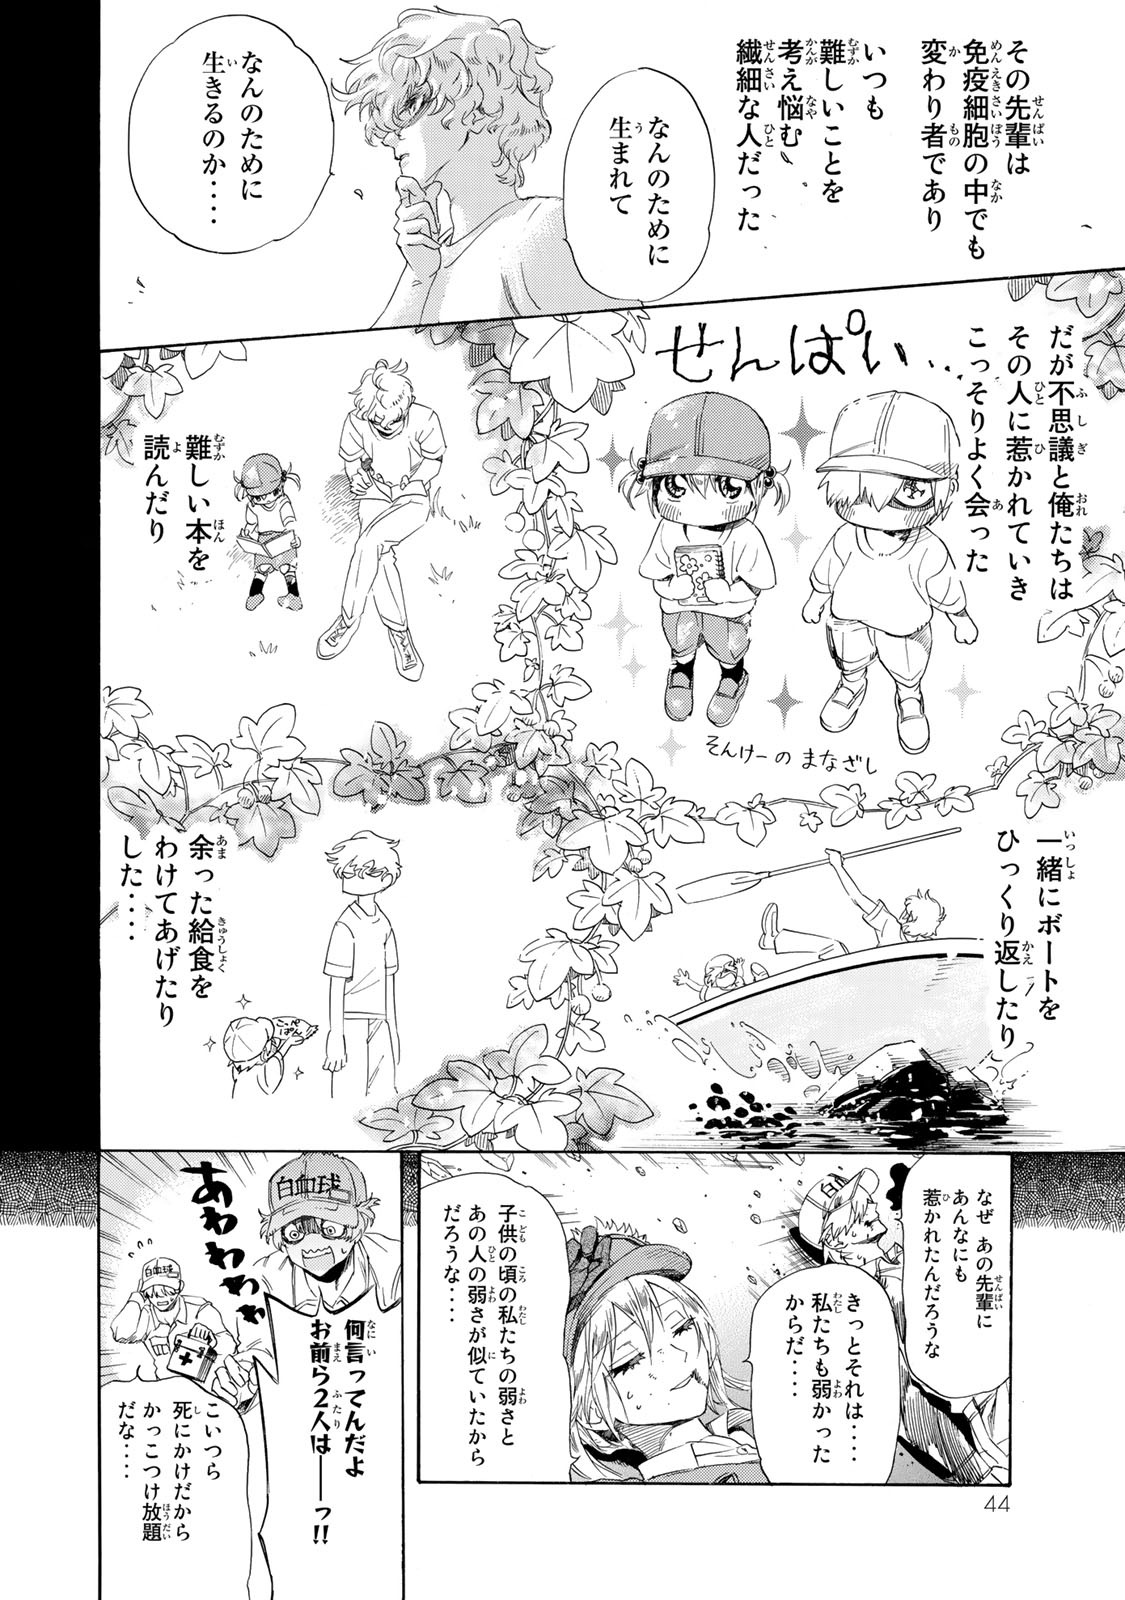 Hataraku Saibou - Chapter 27 - Page 8